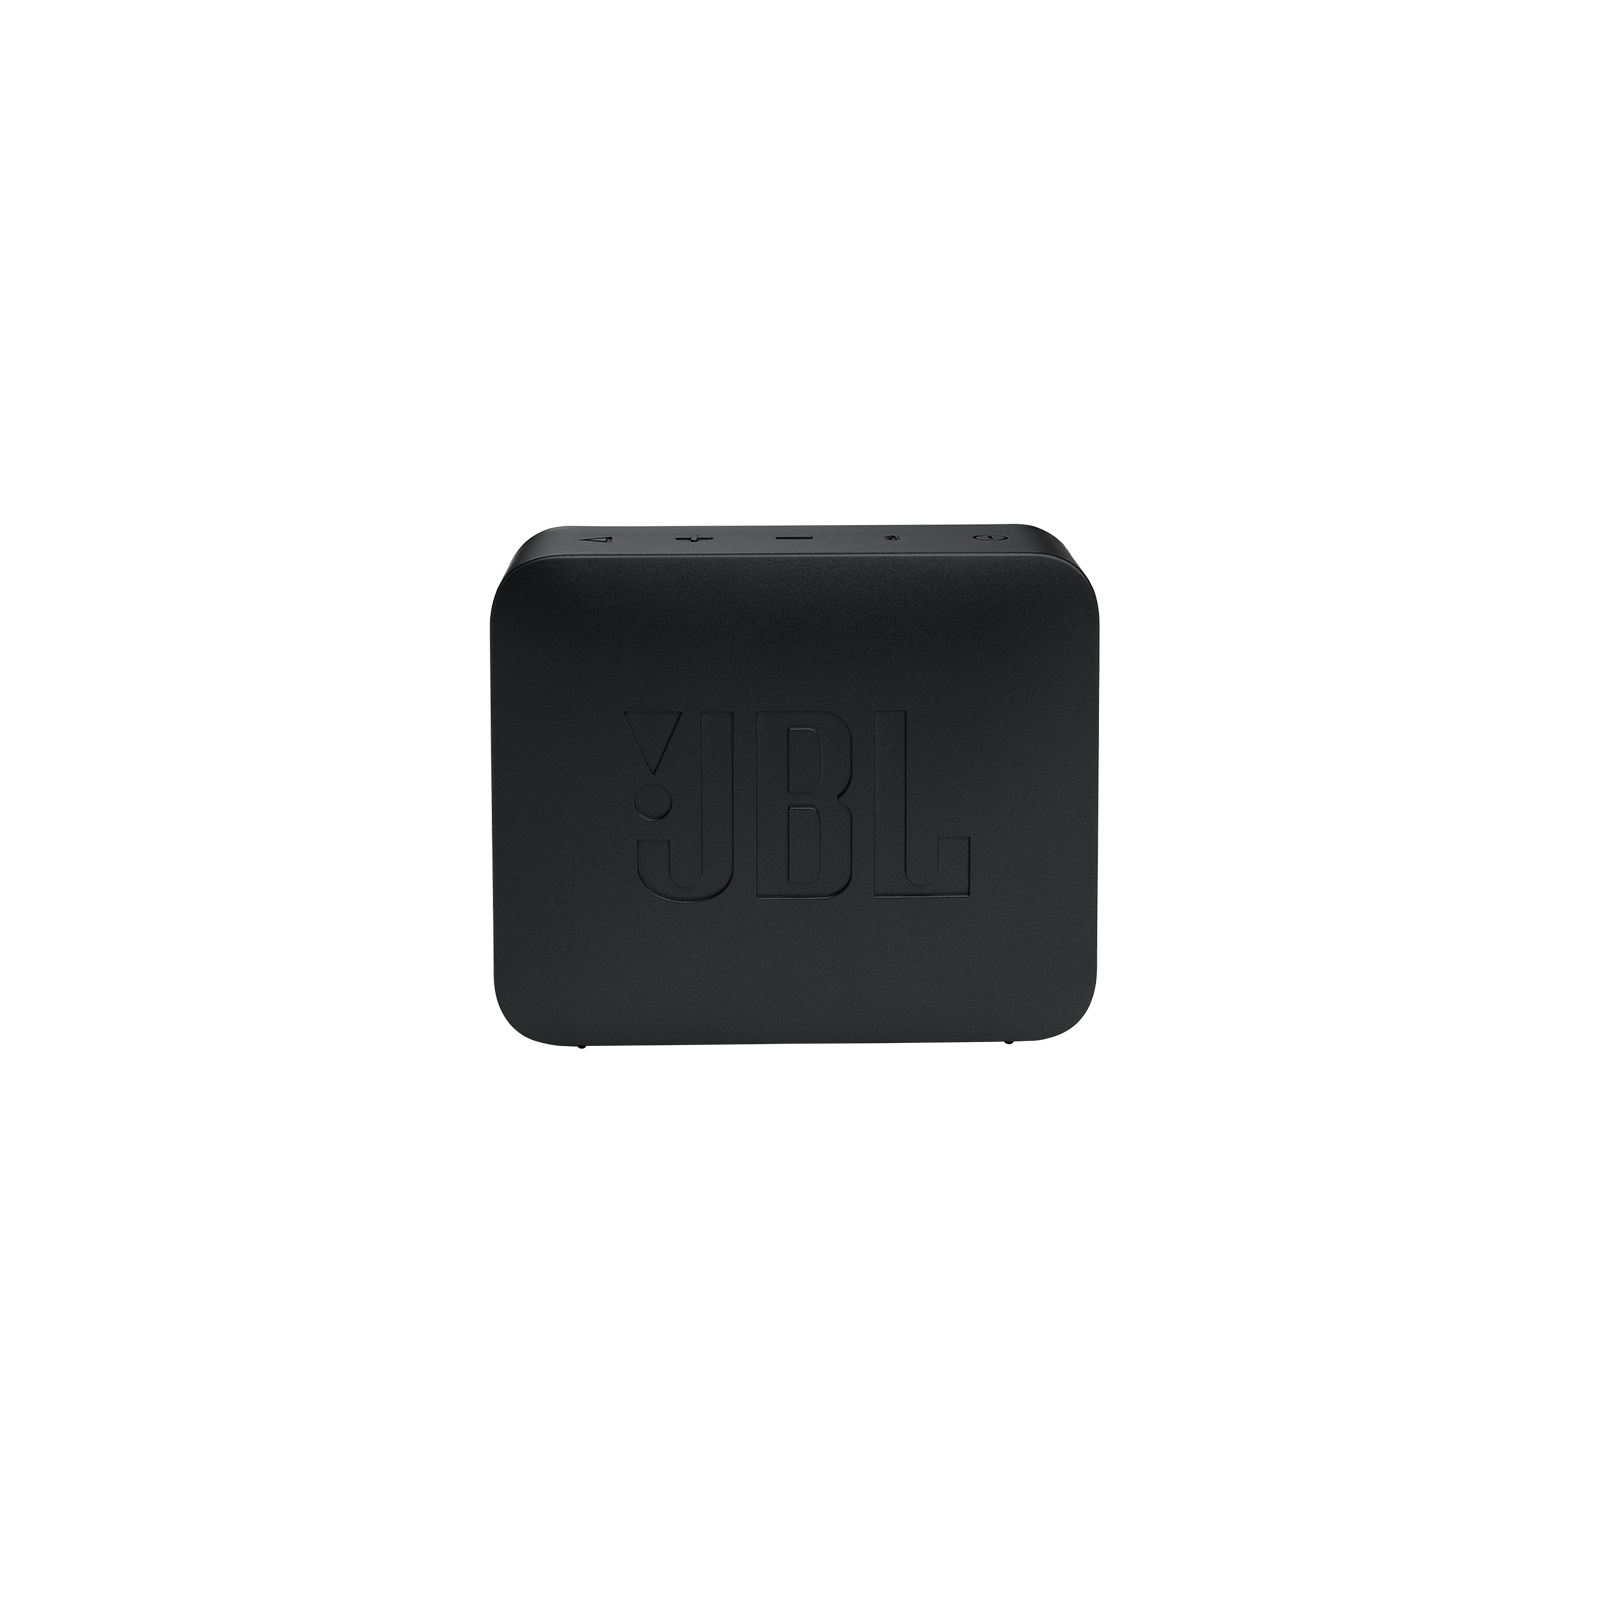 JBL Go Essential Wireless Bluetooth Speaker - Black 